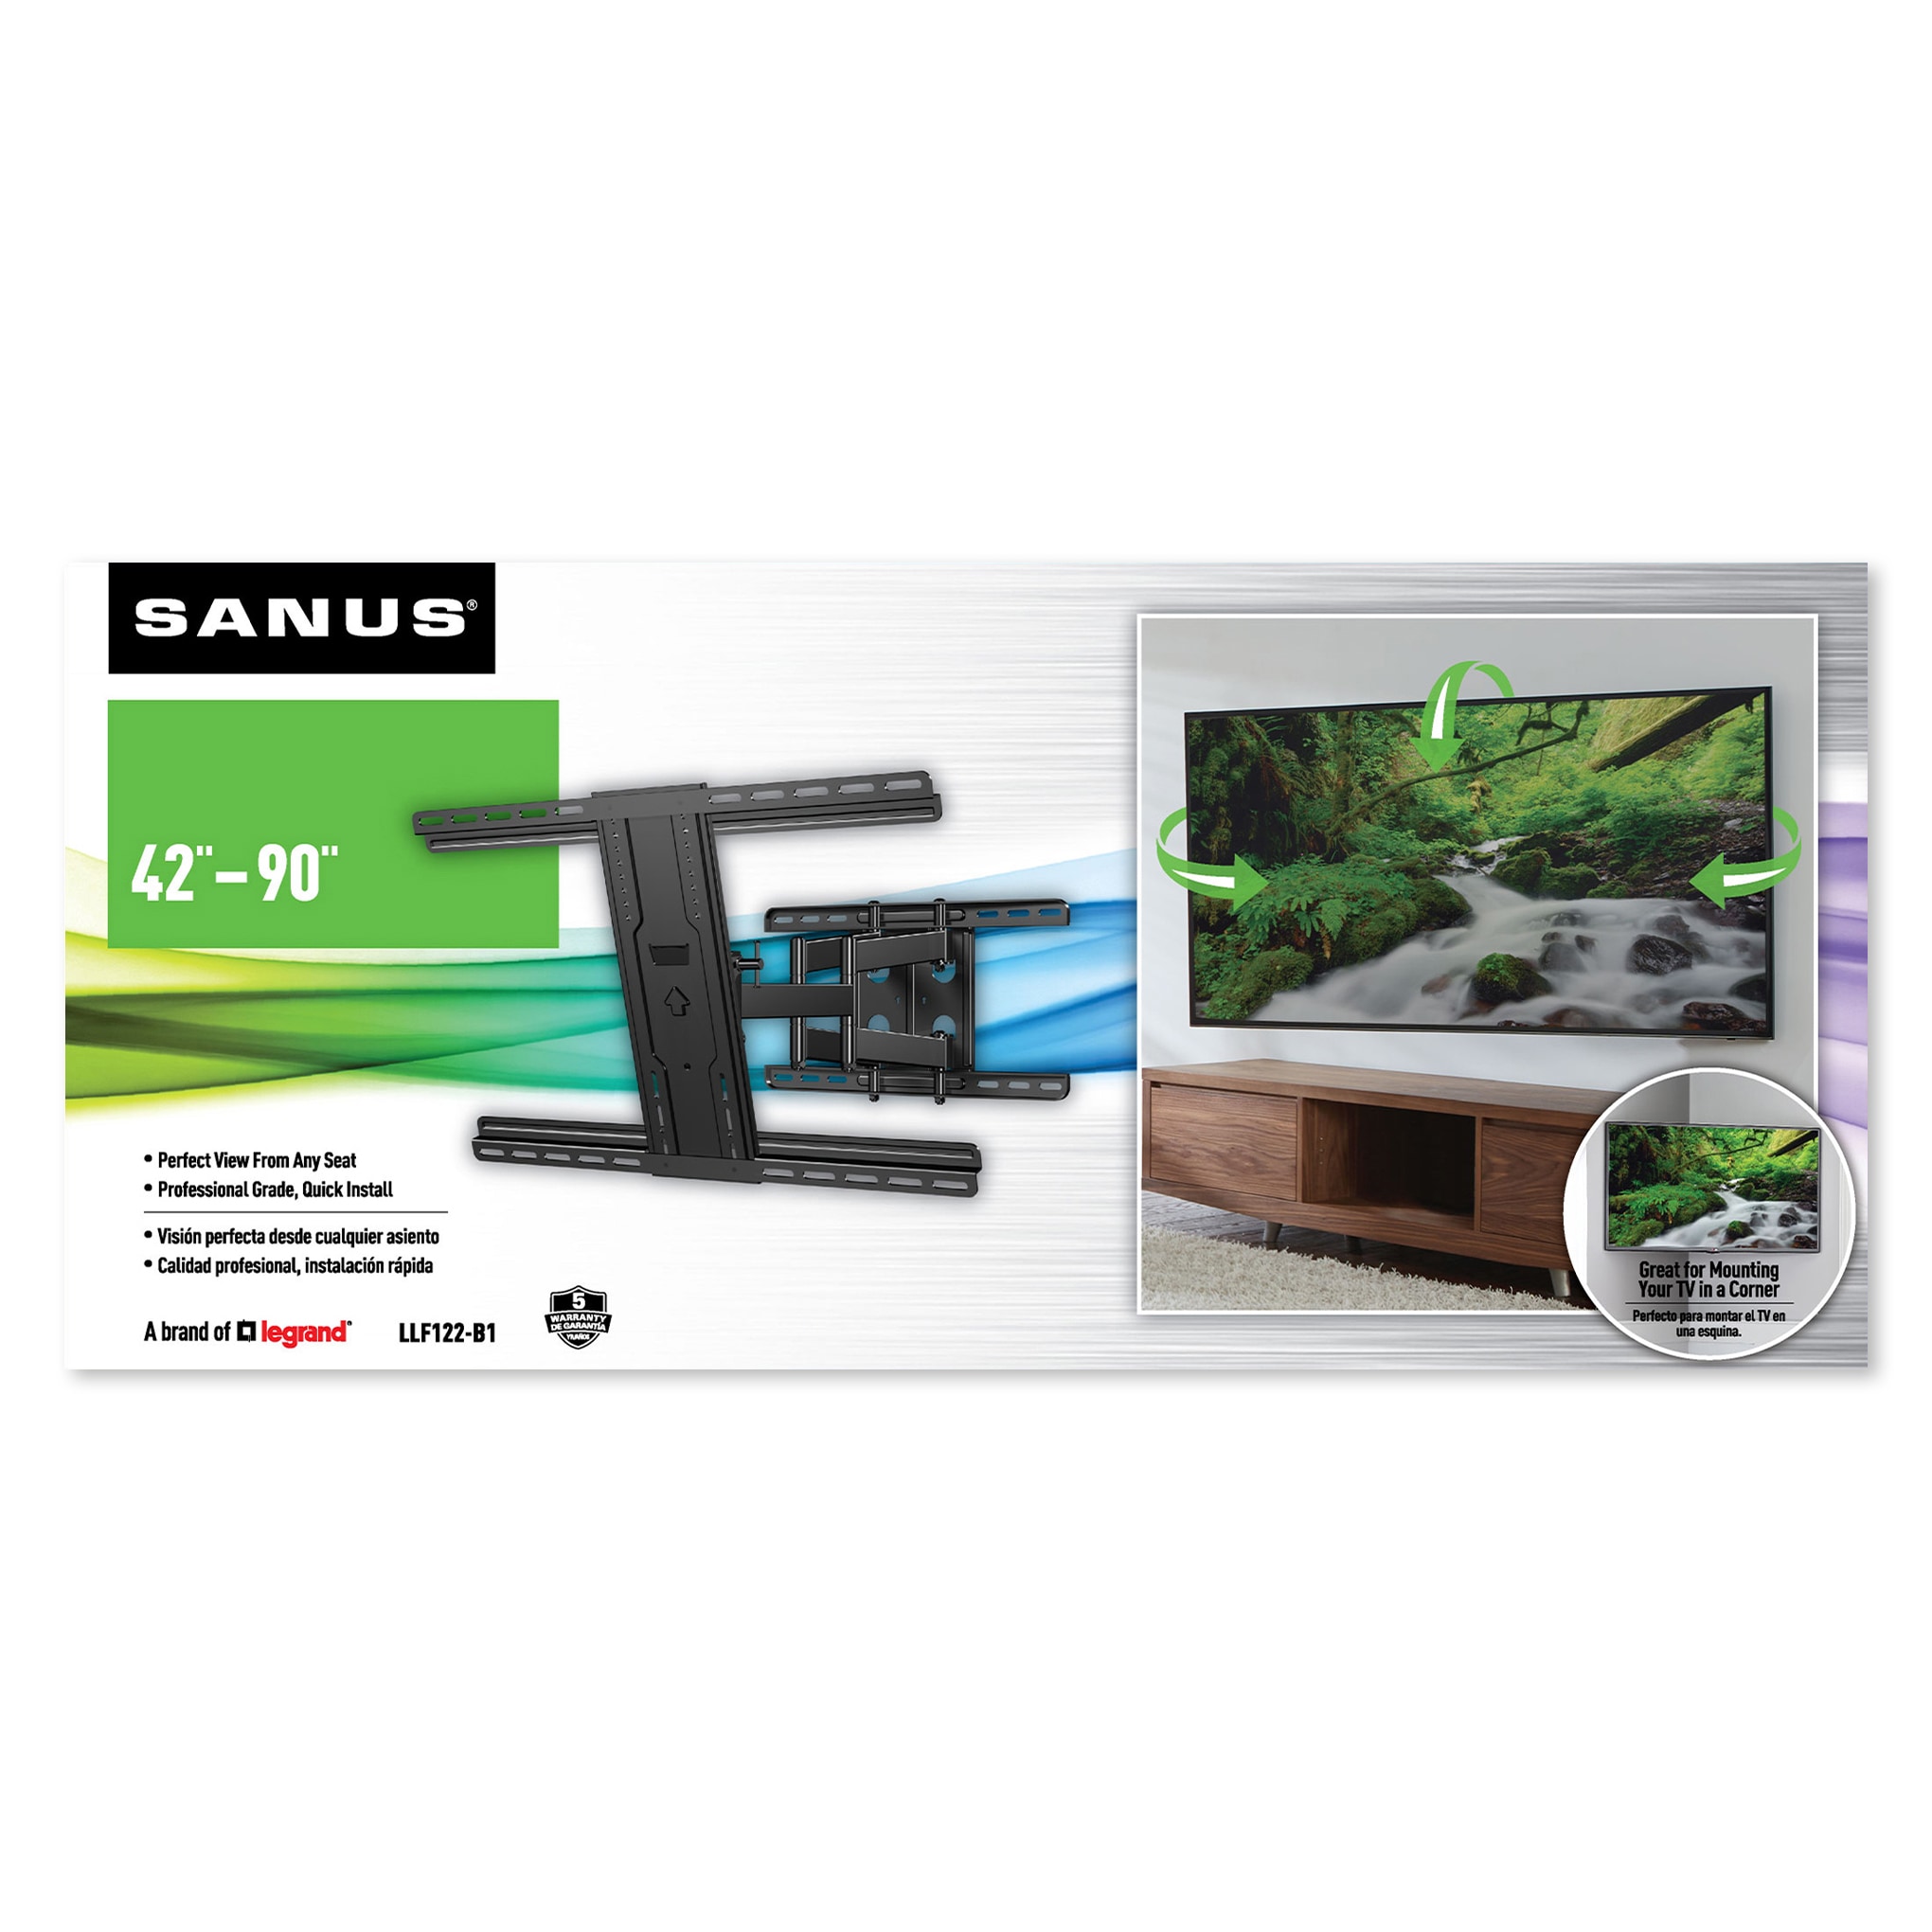 Sanus 3-Piece 3-3/4-in x 8.75-in Plastic White Flat Screen TV Kit | SALIWP1W1